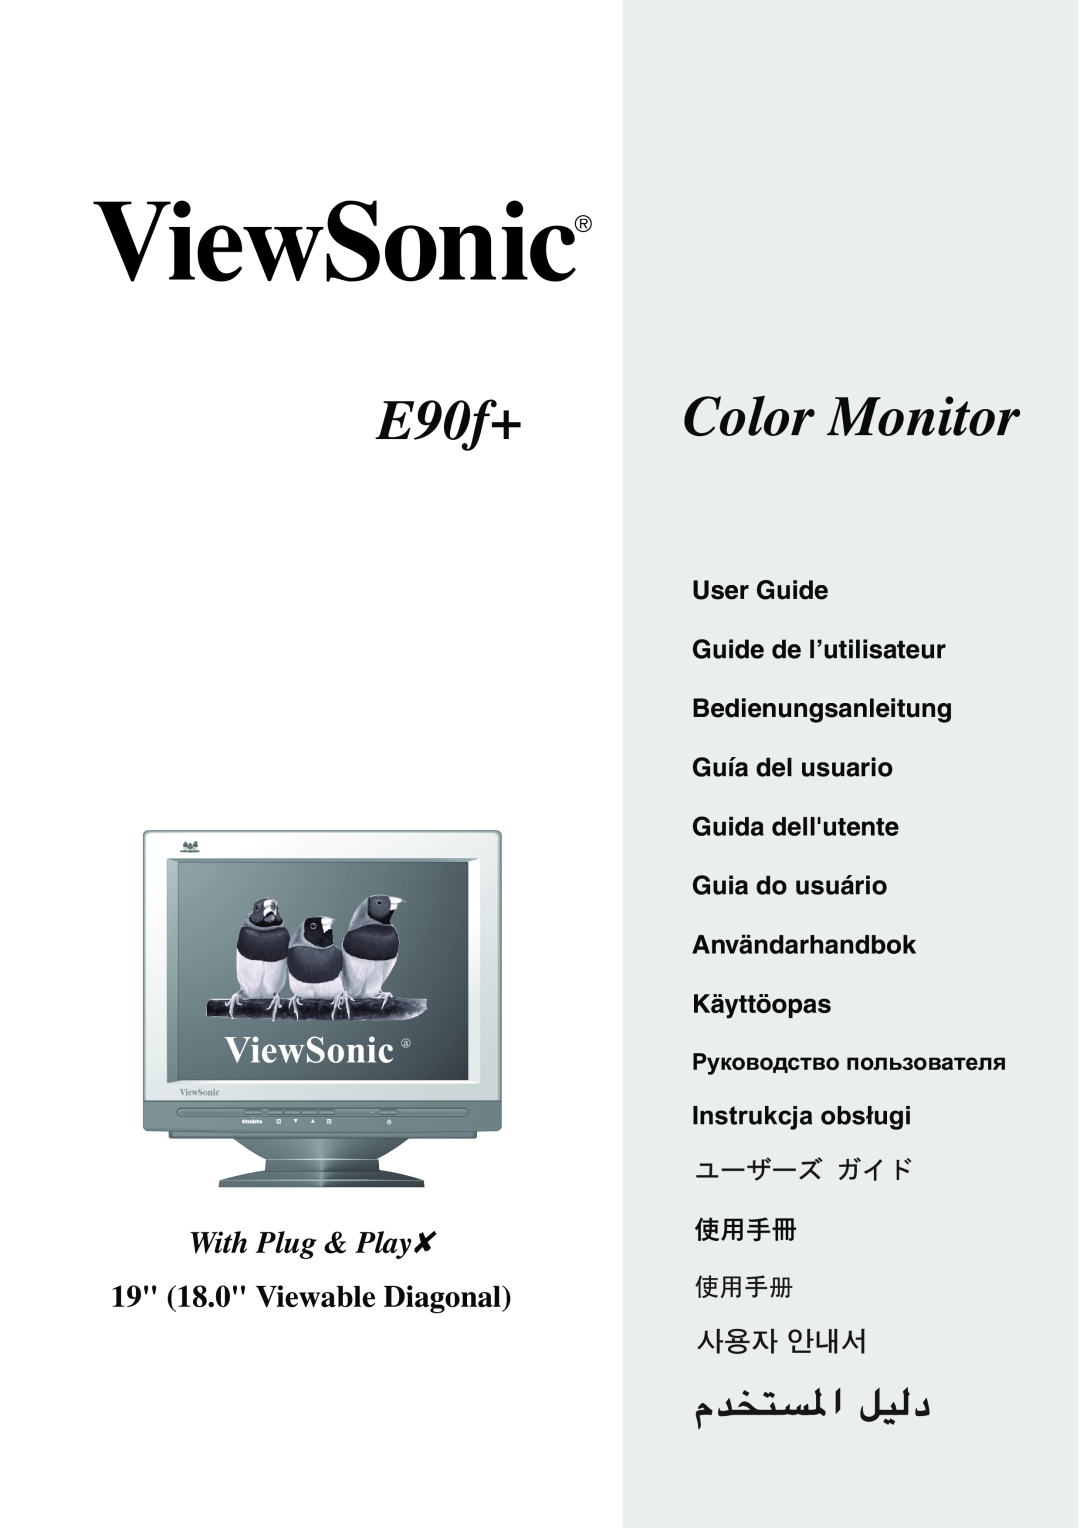 ViewSonic E90f+ manual 19 18.0 Viewable Diagonal, Color Monitor, ViewSonic a, With Plug & Play, Käyttöopas 